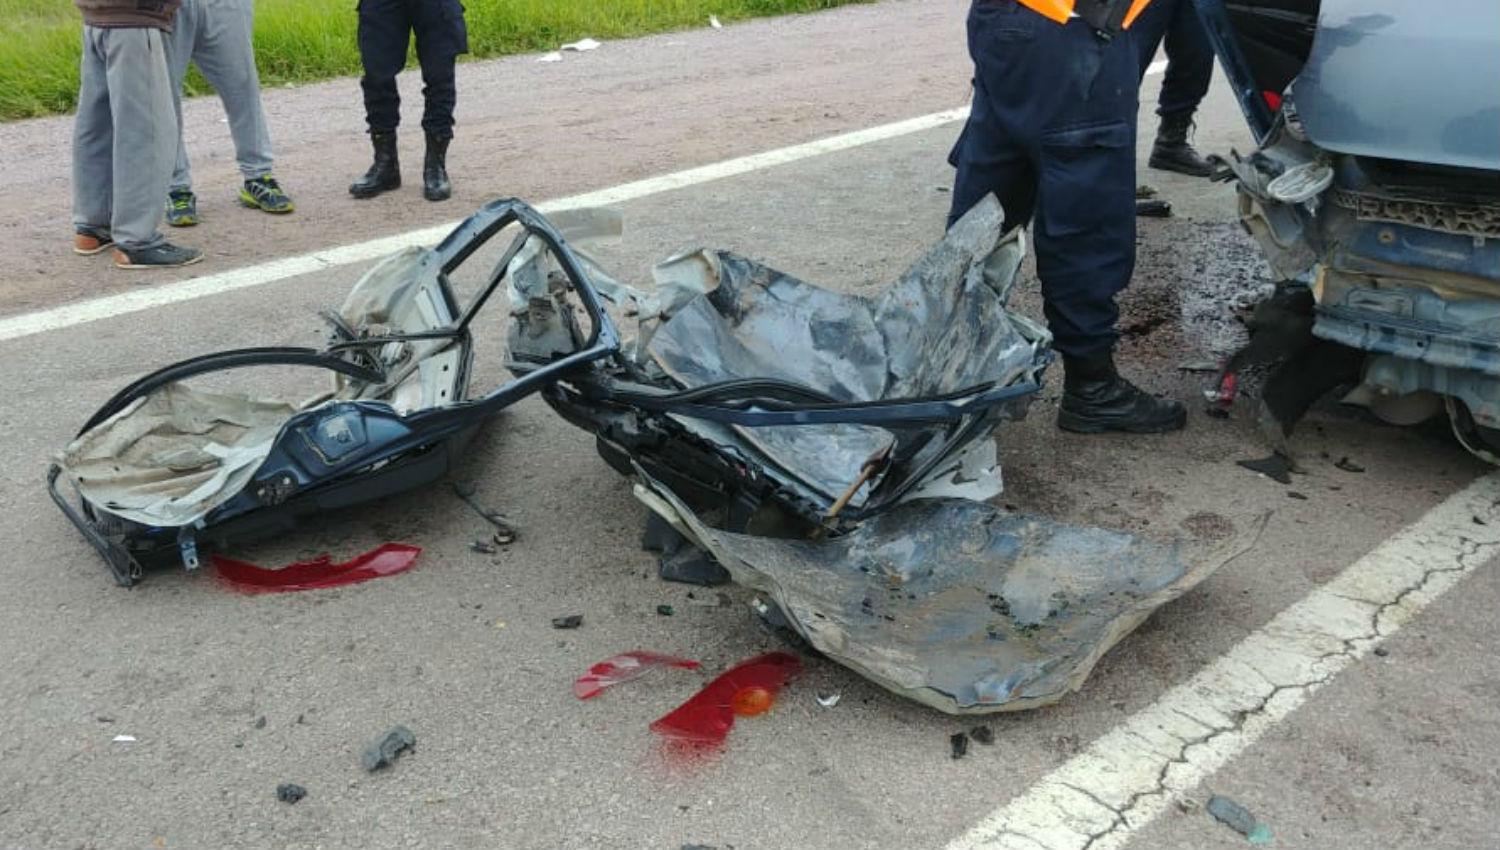 Tragedia en Santiago: revelaron detalles del accidente en el que murió una joven tucumana